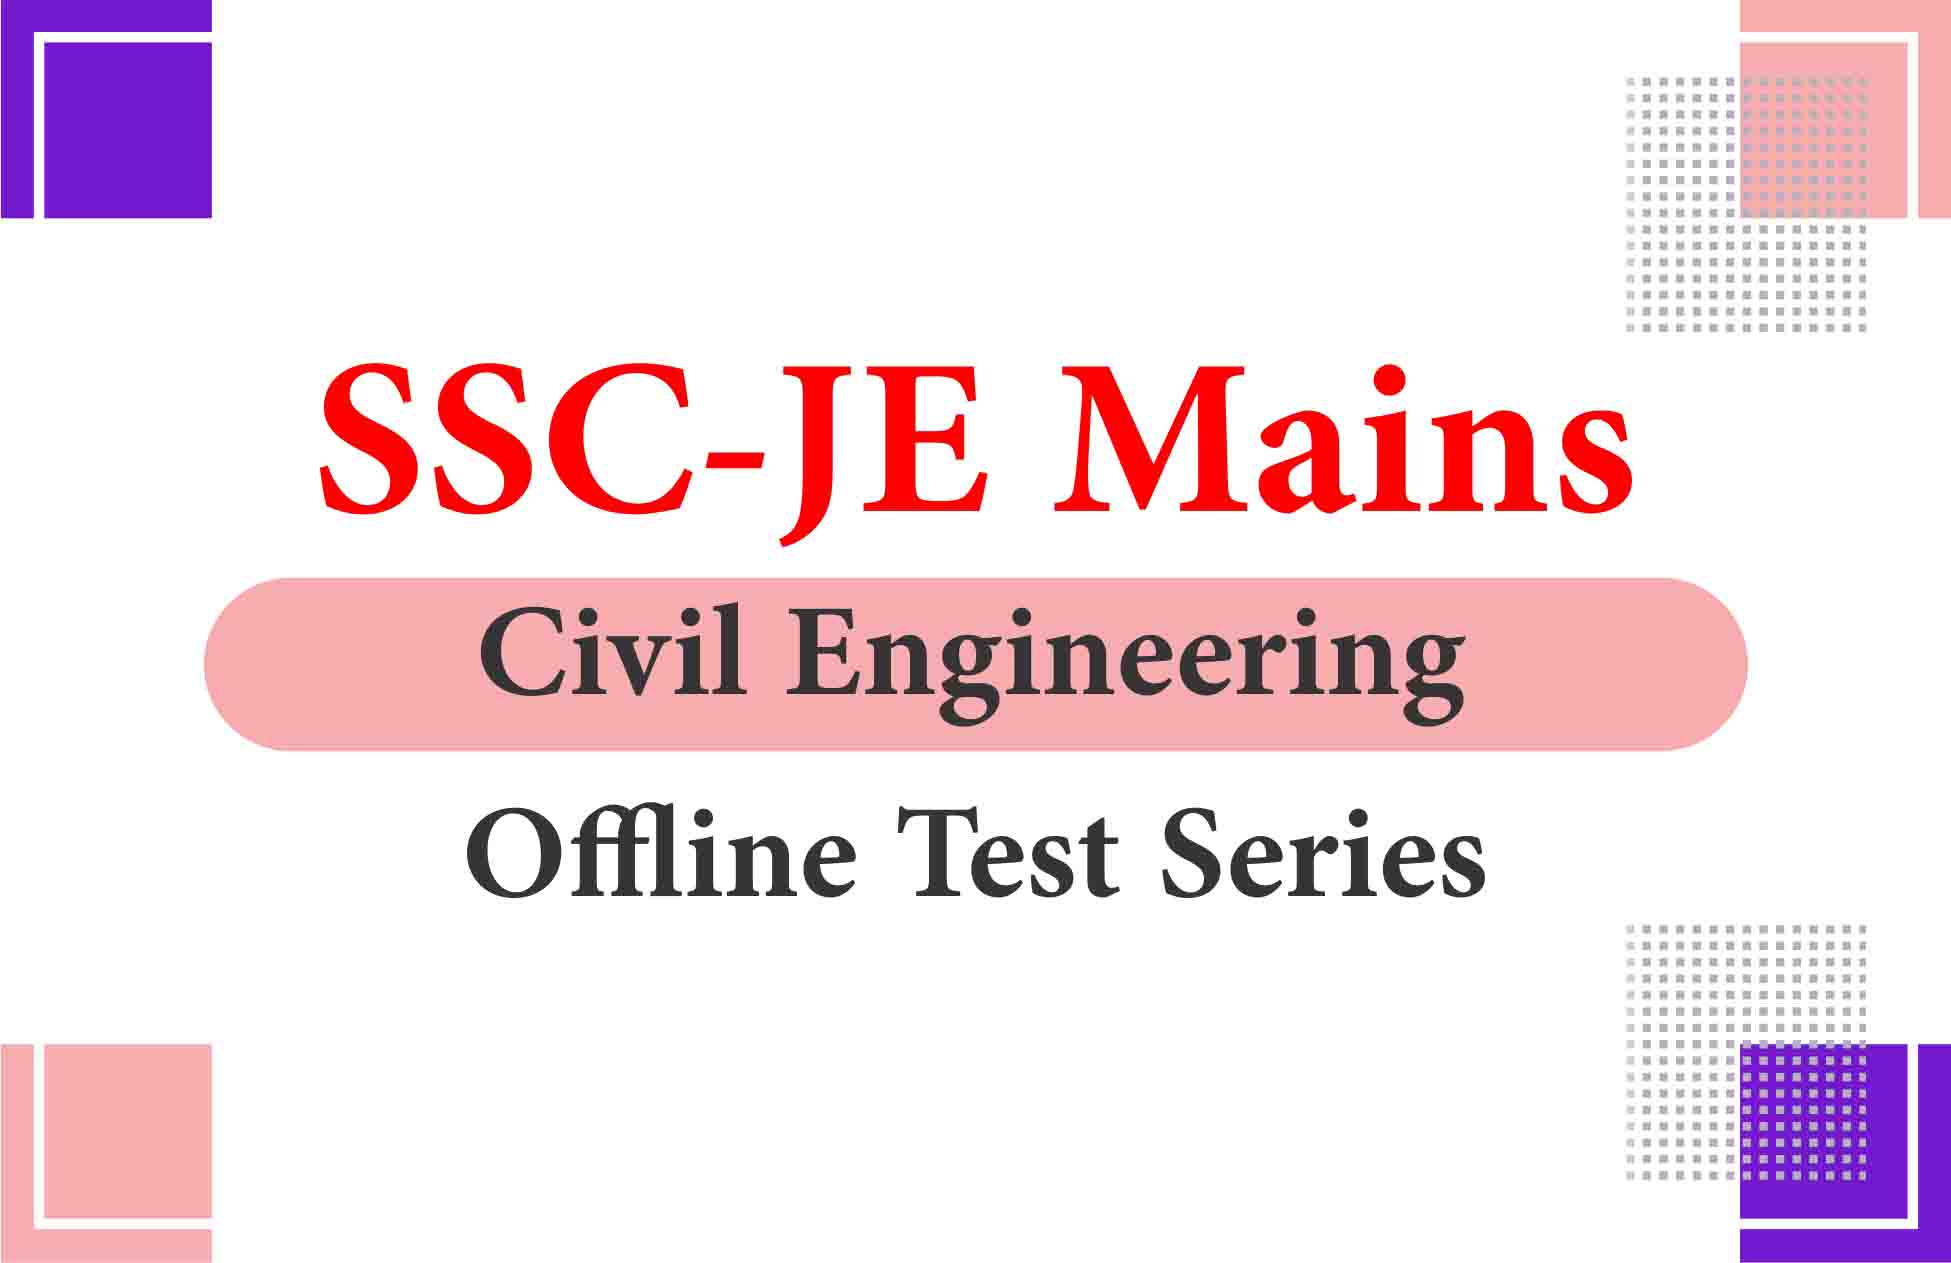 SSC JE Mains Civil Engineering Offline Test Series